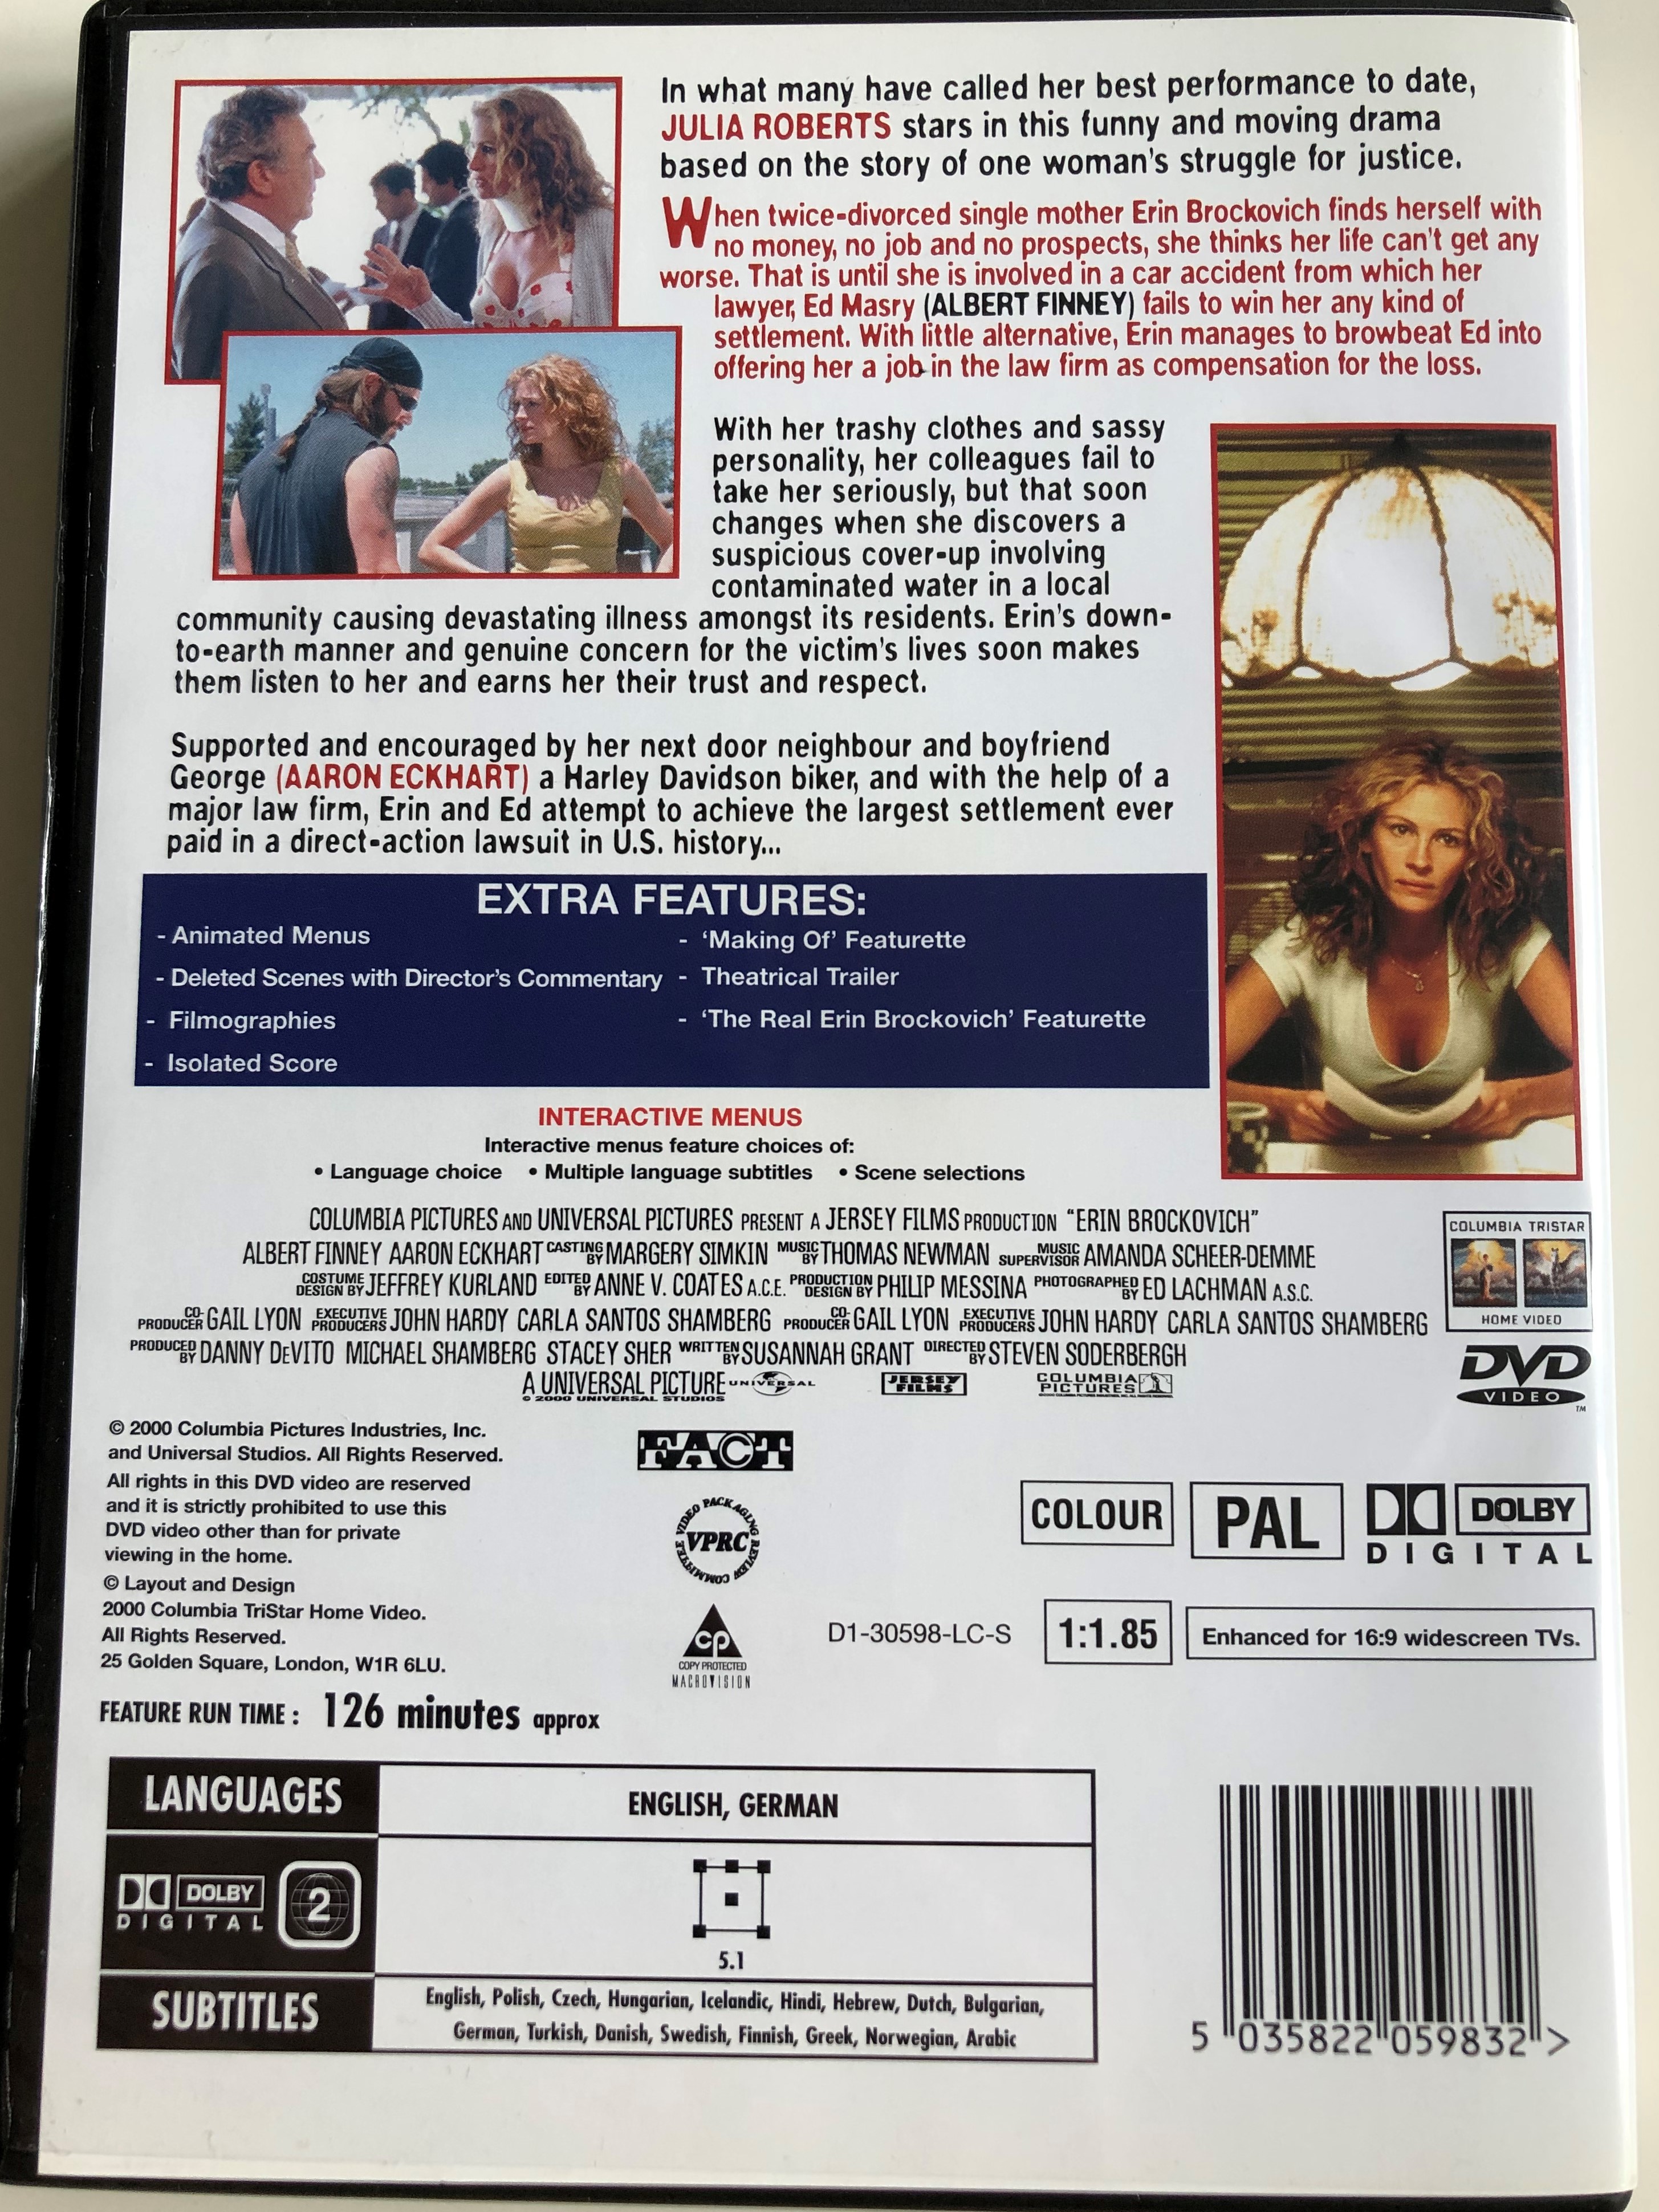 erin-brockovich-dvd-2000-based-on-a-true-story-directed-by-steven-soderbergh-starring-julia-roberts-albert-finney-aaron-eckhart-2-.jpg